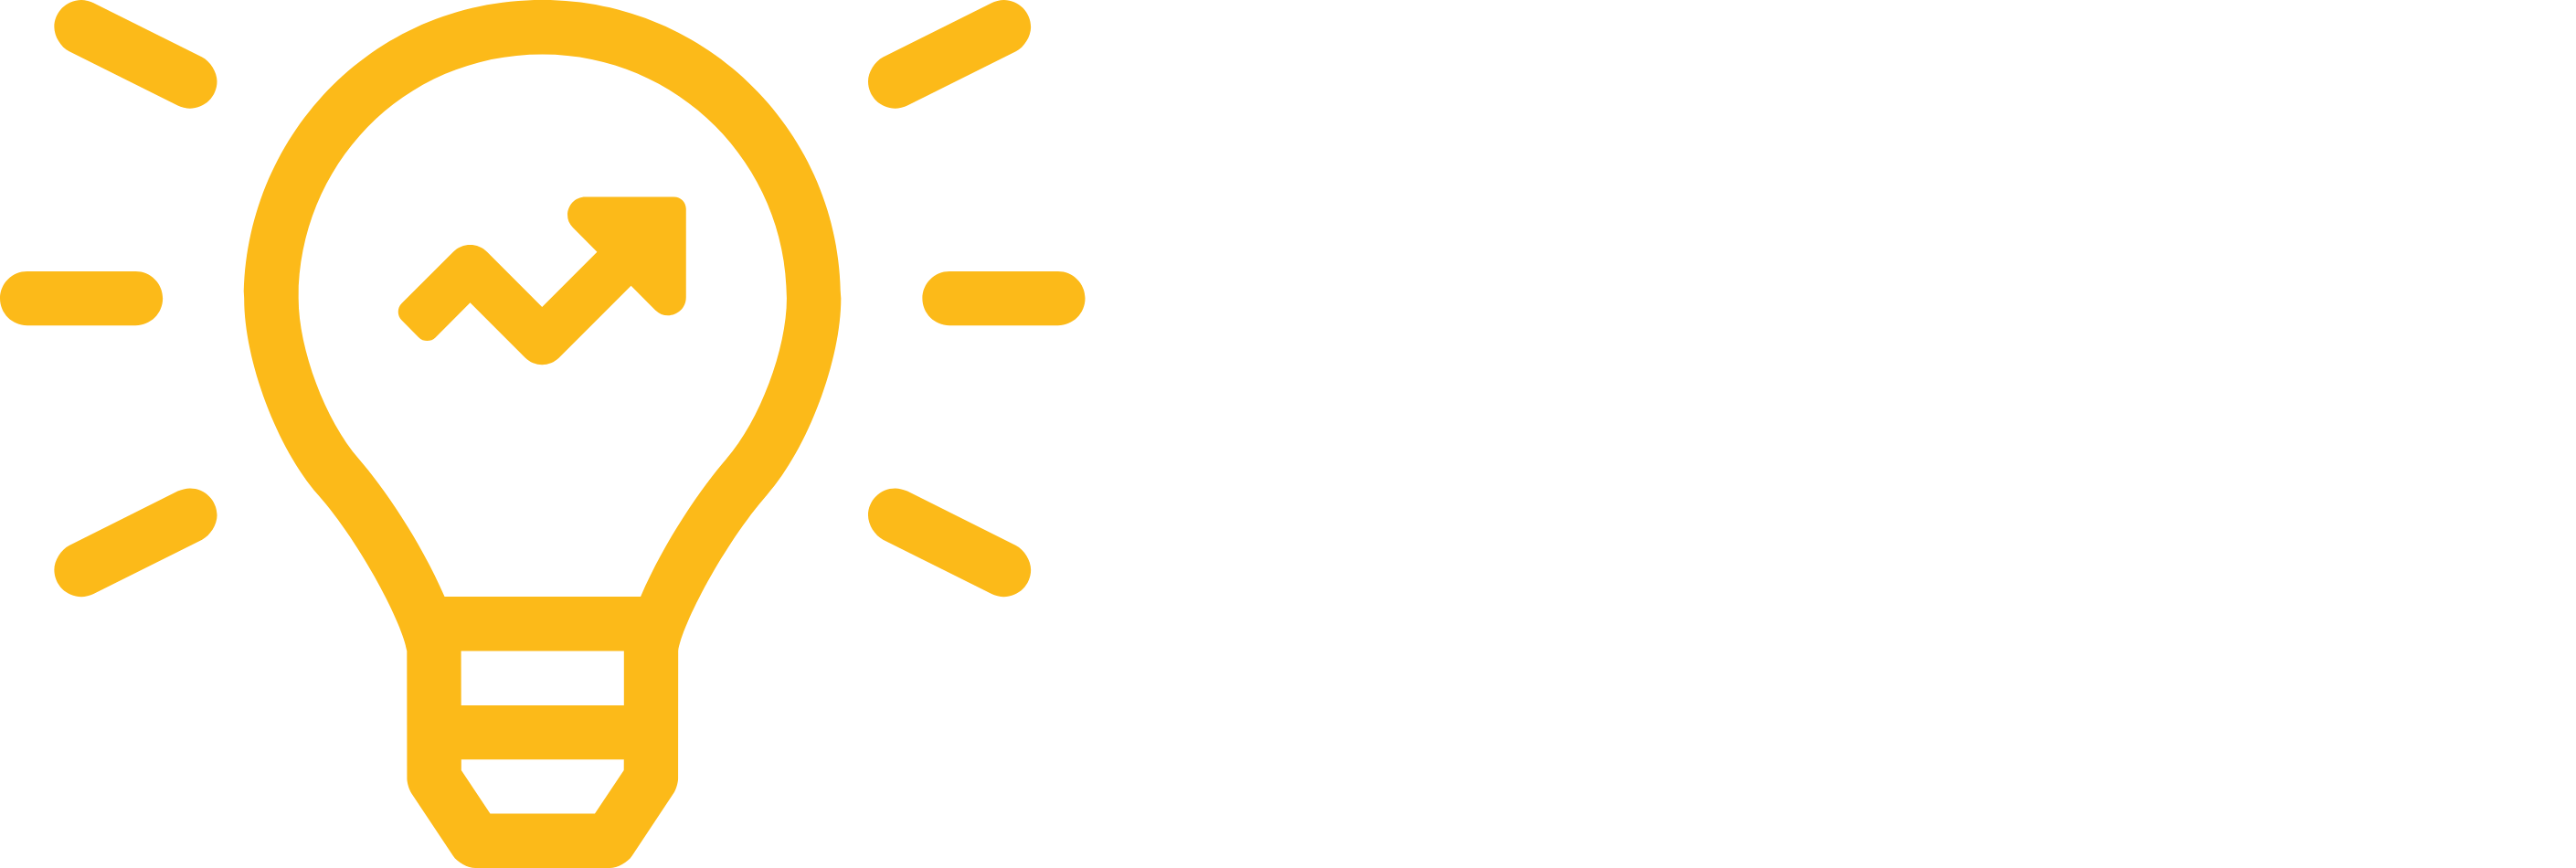 HSIAR - Analytics to Action